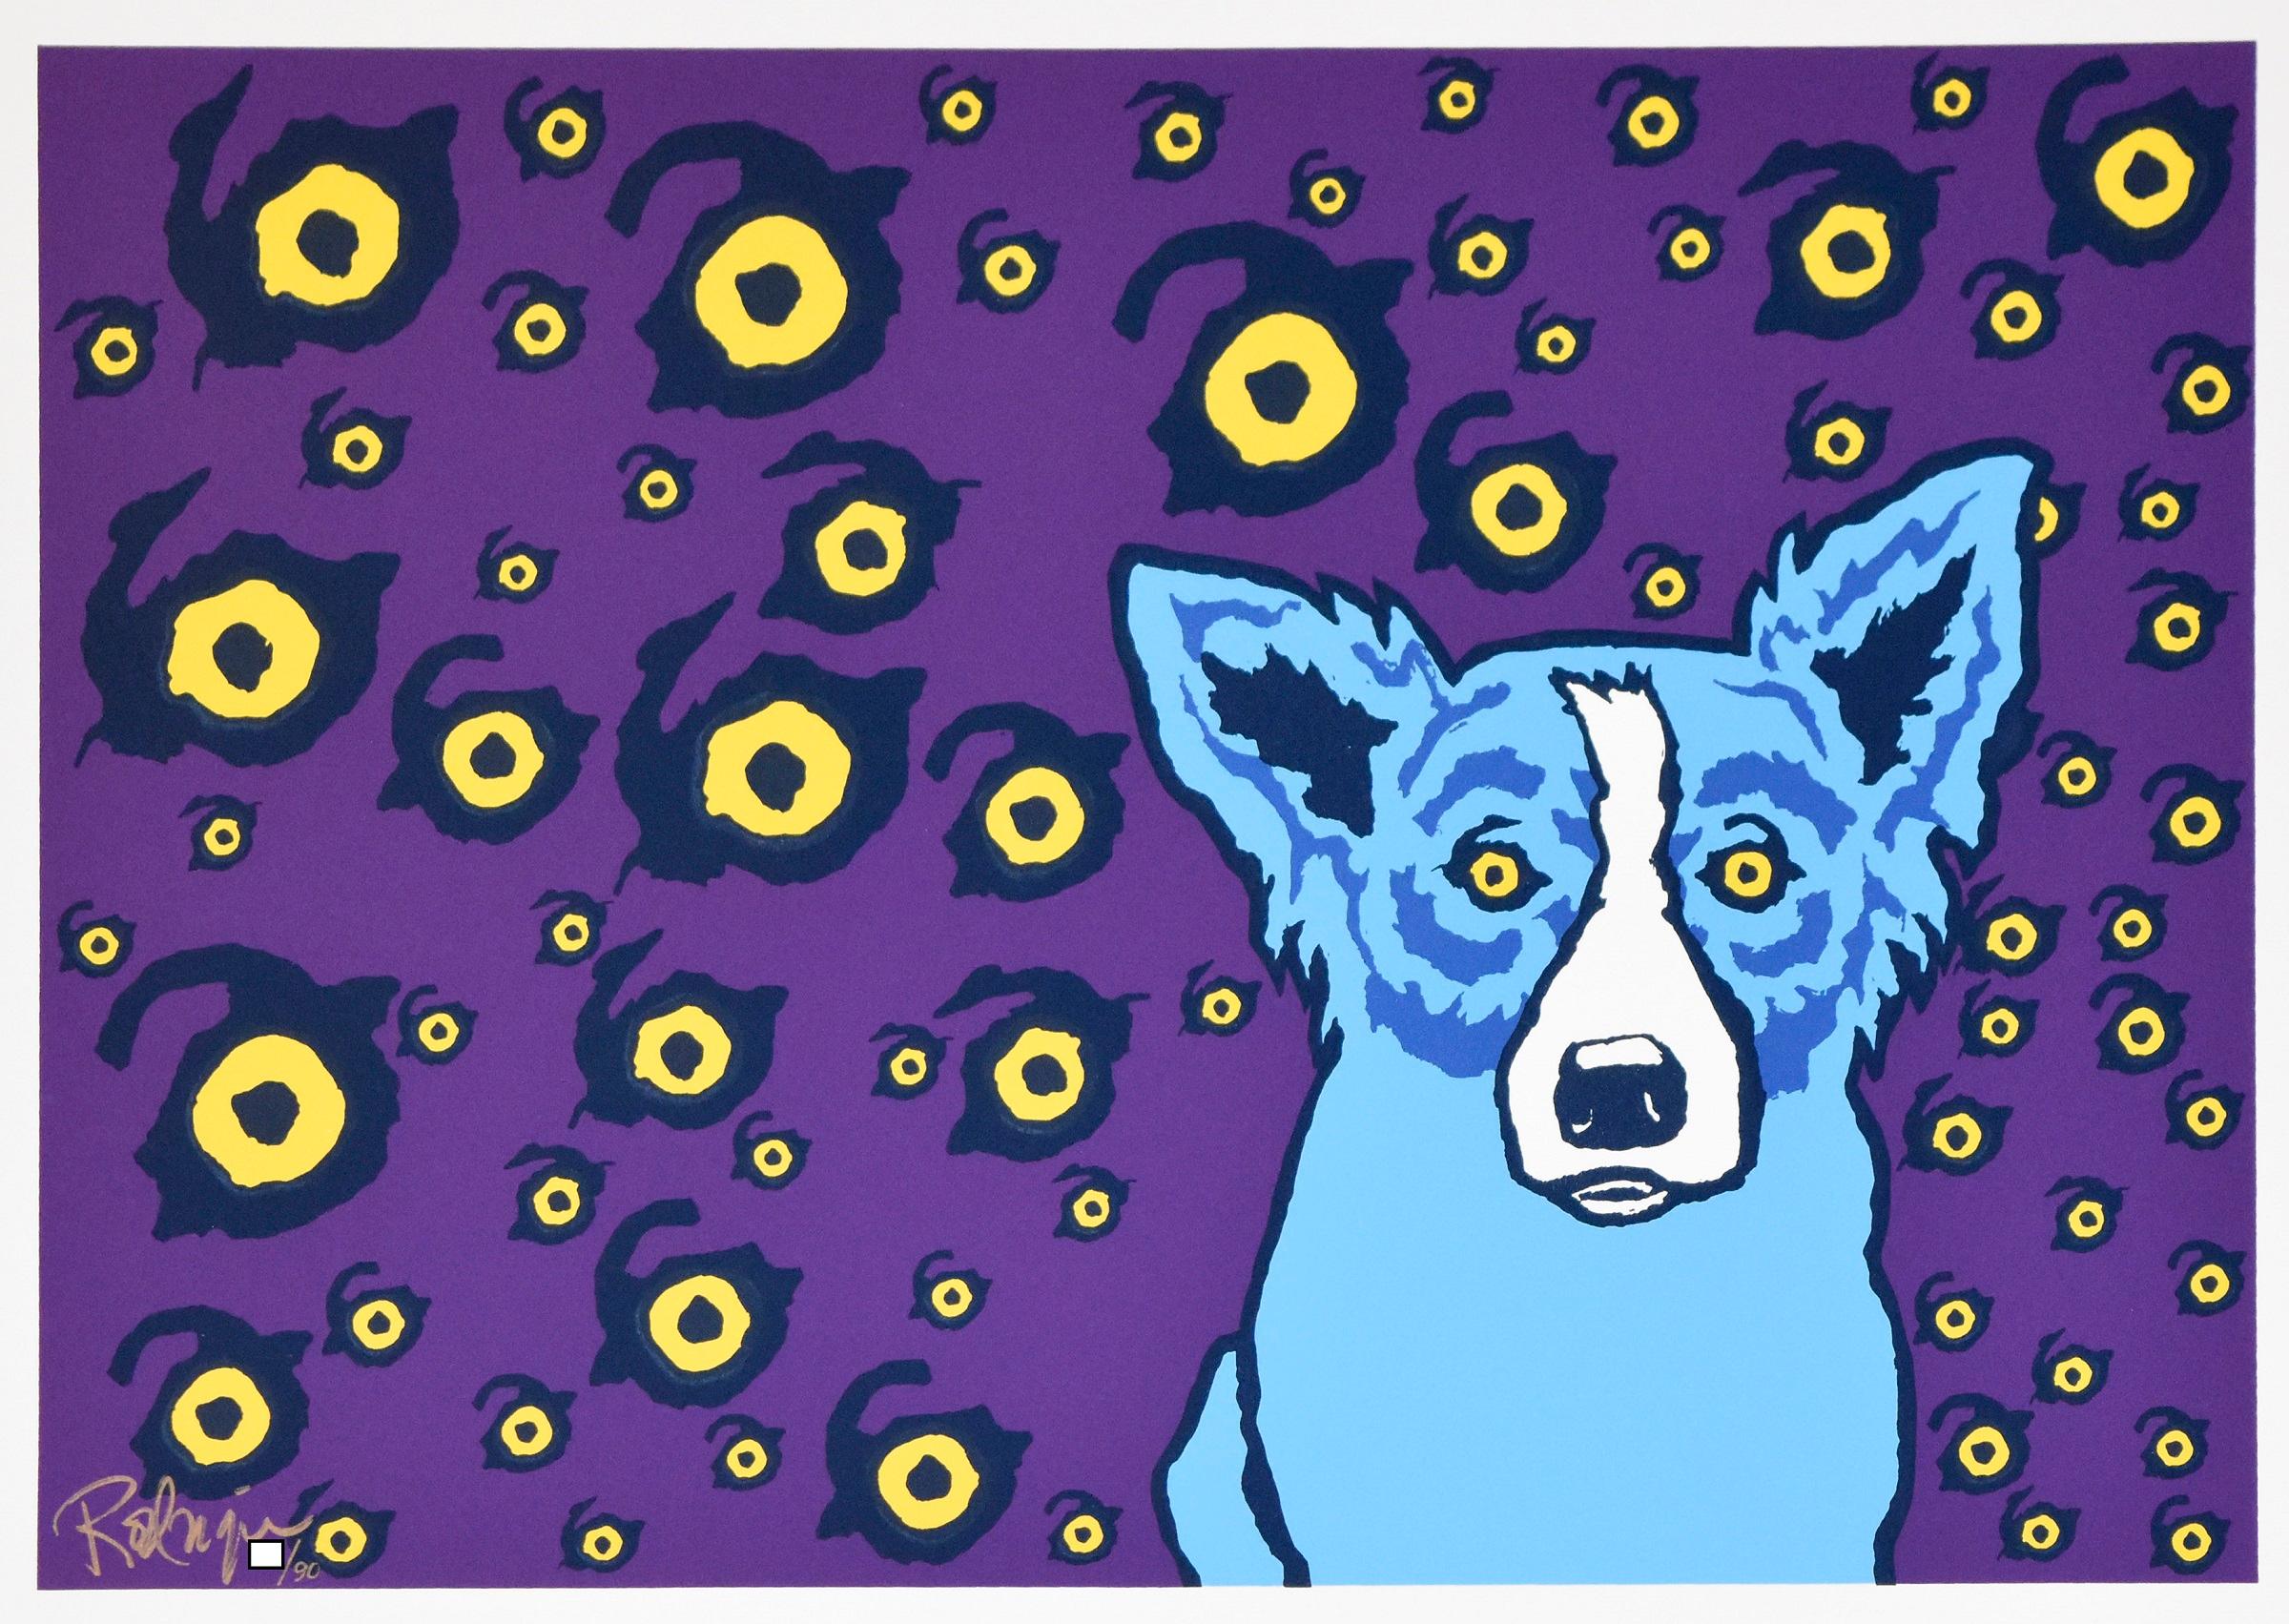 George Rodrigue Animal Print - I See You, You See Me - Signed Silkscreen Print Blue Dog